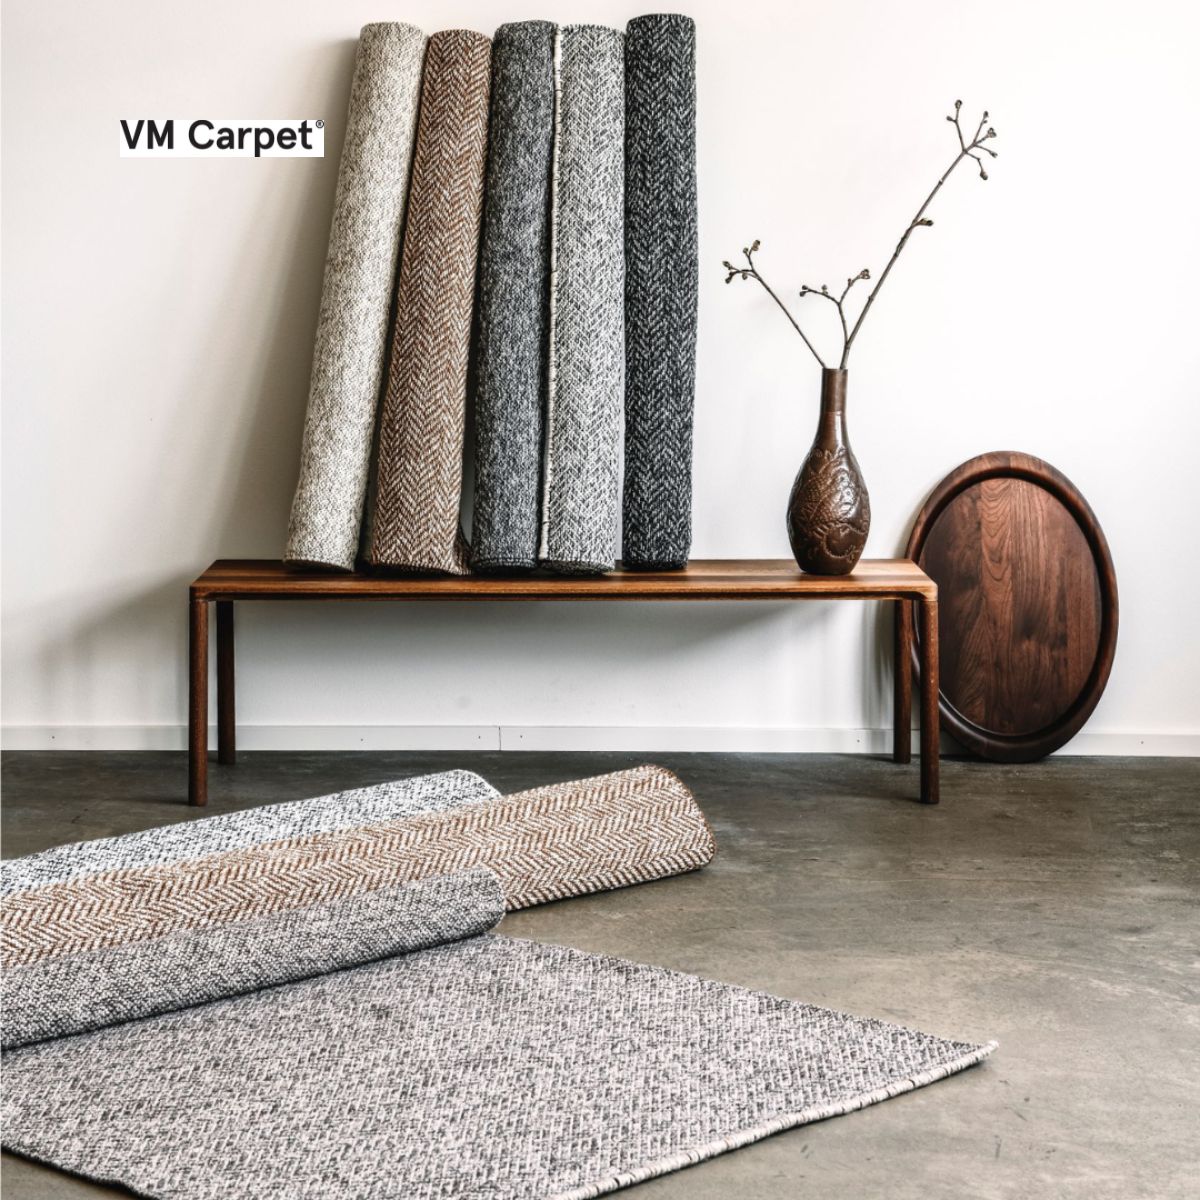 VM Carpet mittatilausmatot